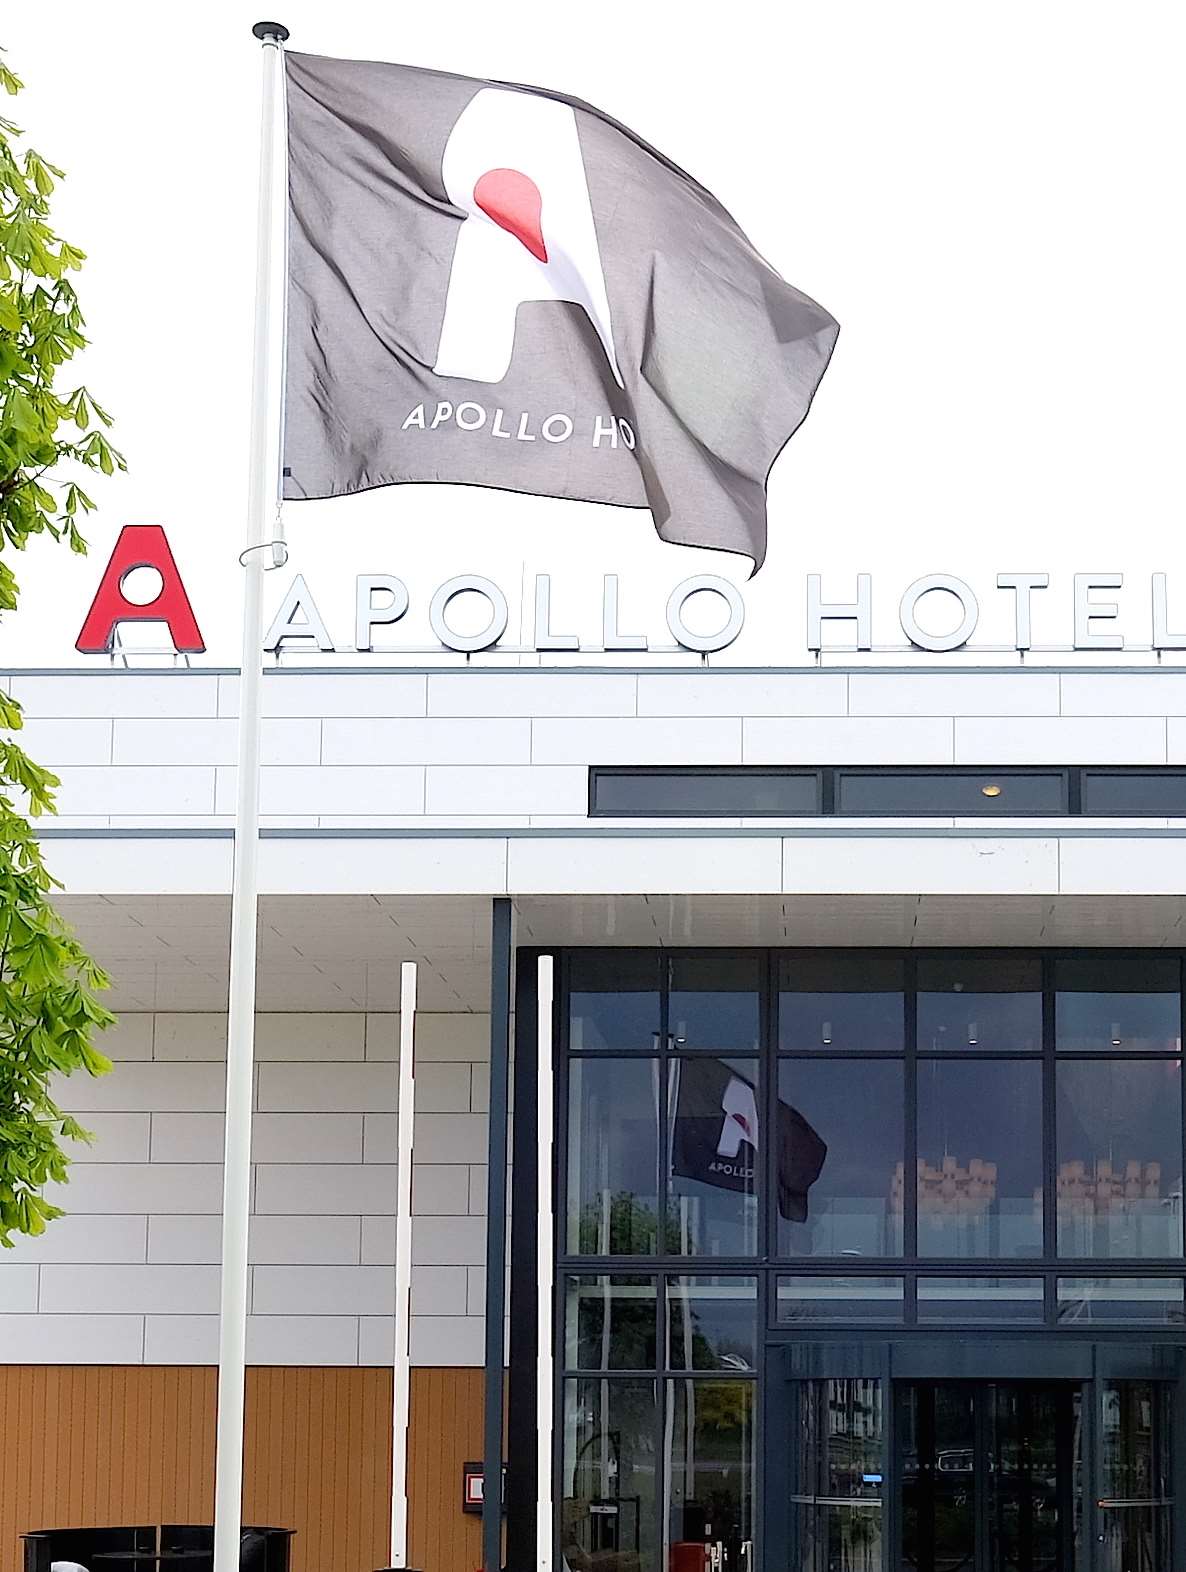 Apollo Hotel Vinkeveen-Amsterdam